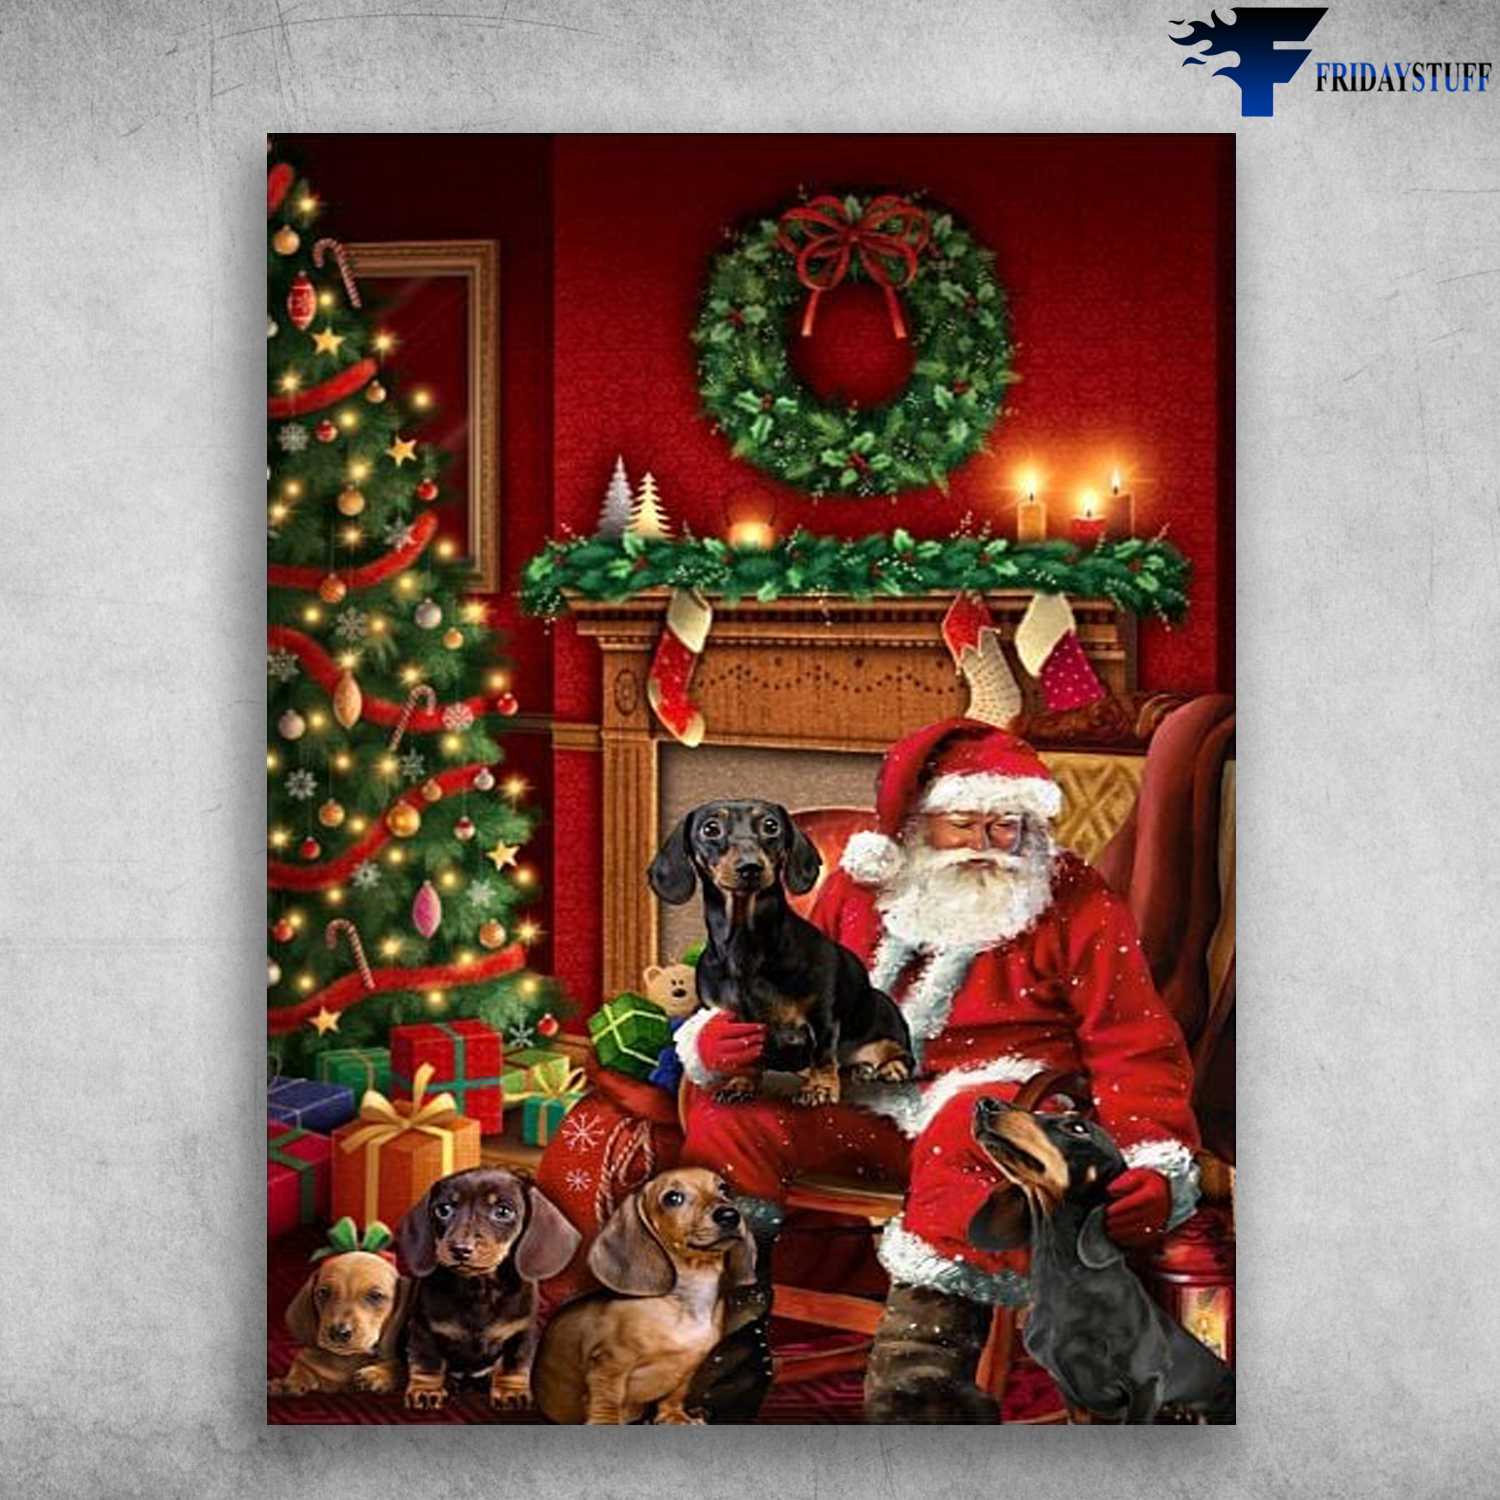 Dachshund Dog, Christmas Poster, Santa Claus